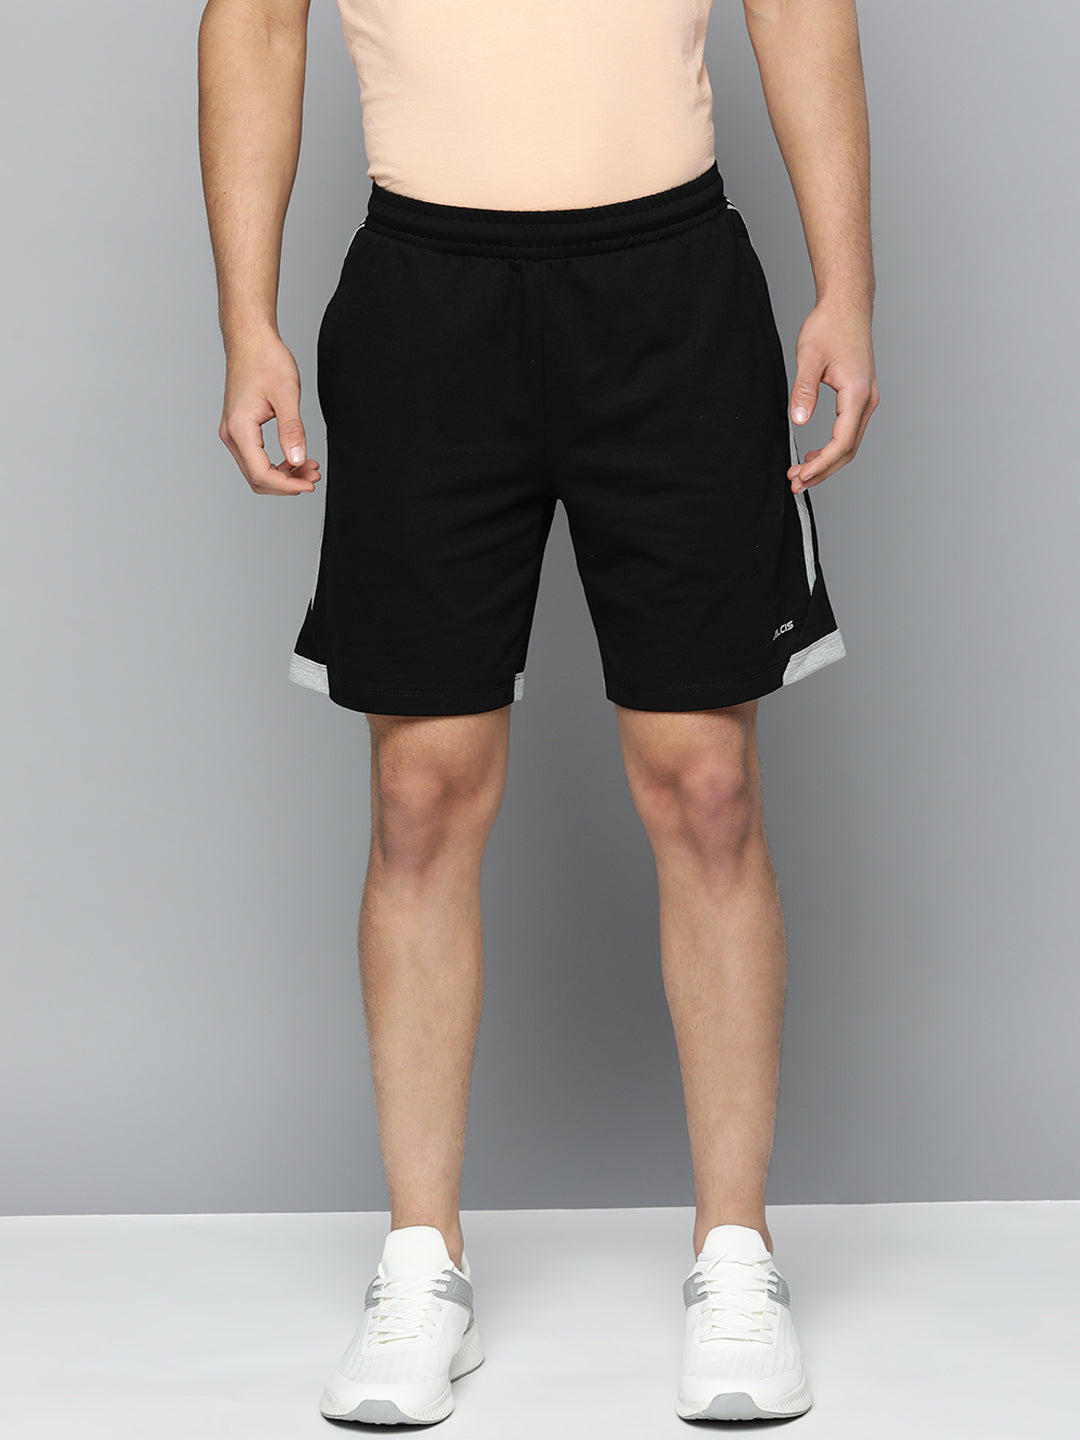 Alcis Men Striped Regular Fit Sports Shorts